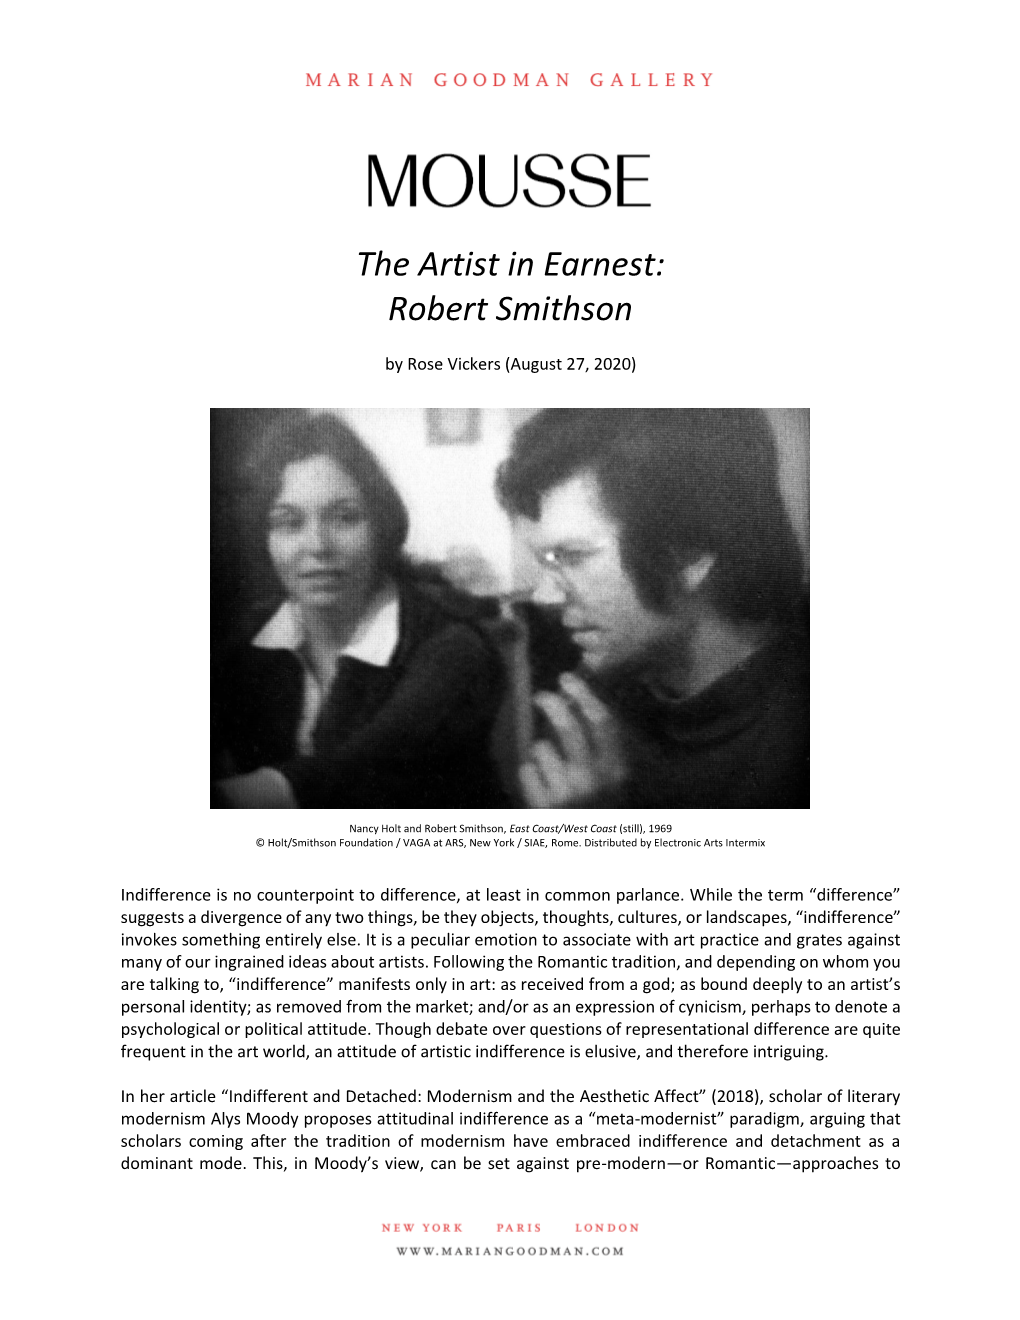 Press the Artist in Earnest: Robert Smithson Mousse Magazine, August 27, 2020